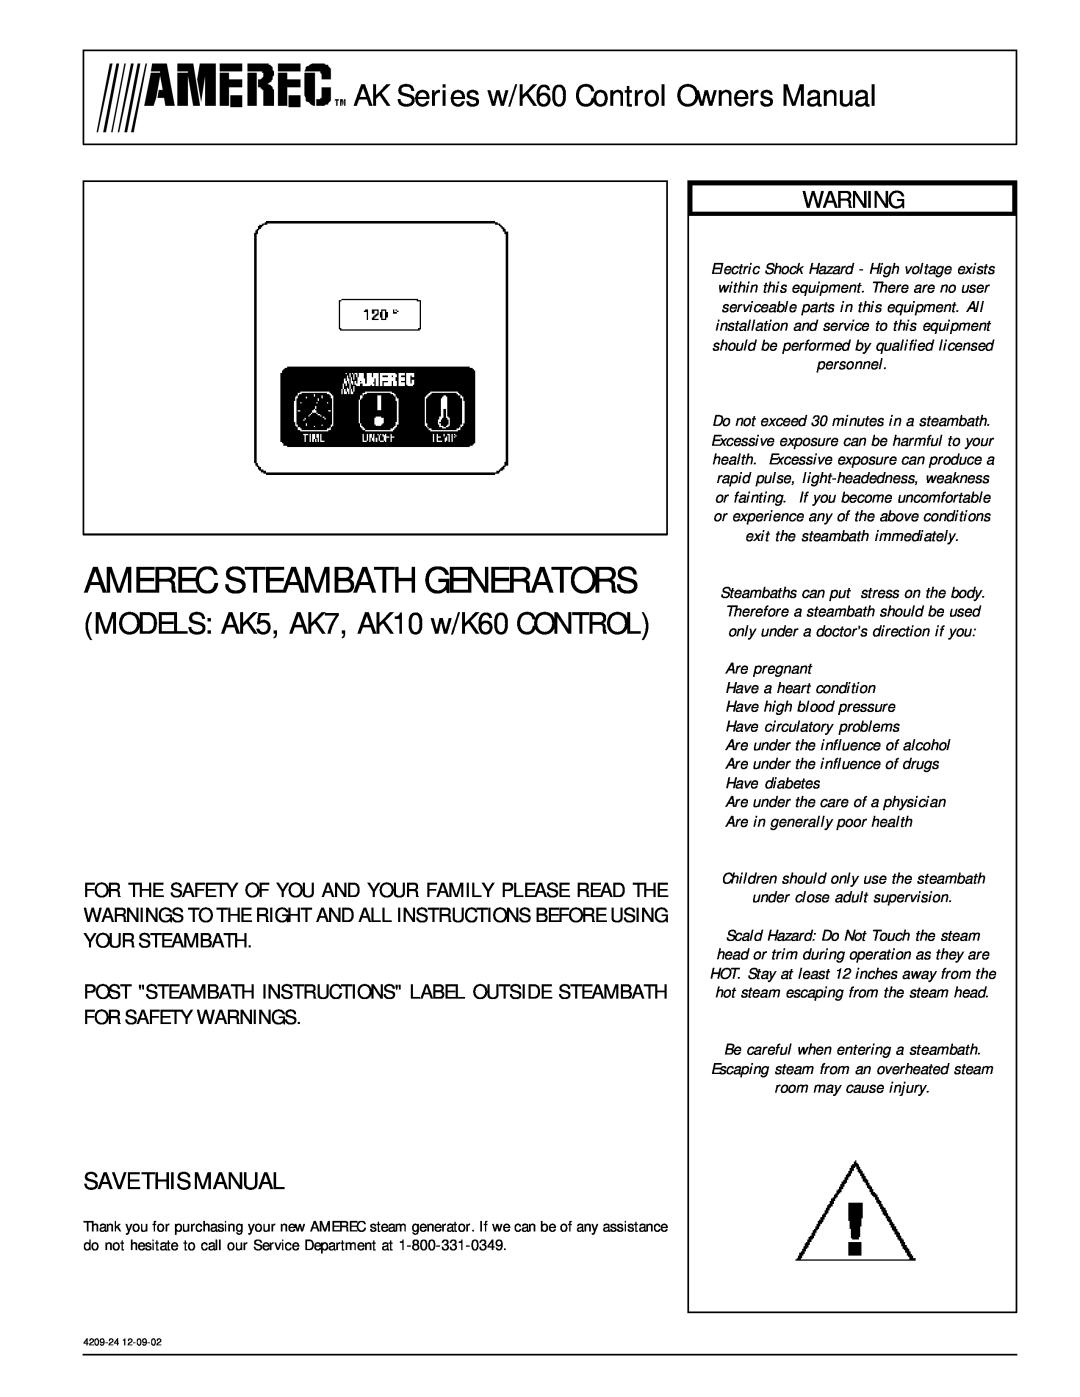 Amerec W/K60 owner manual Amerec Steambath Generators, MODELS AK5, AK7, AK10 w/K60 CONTROL, Save This Manual 